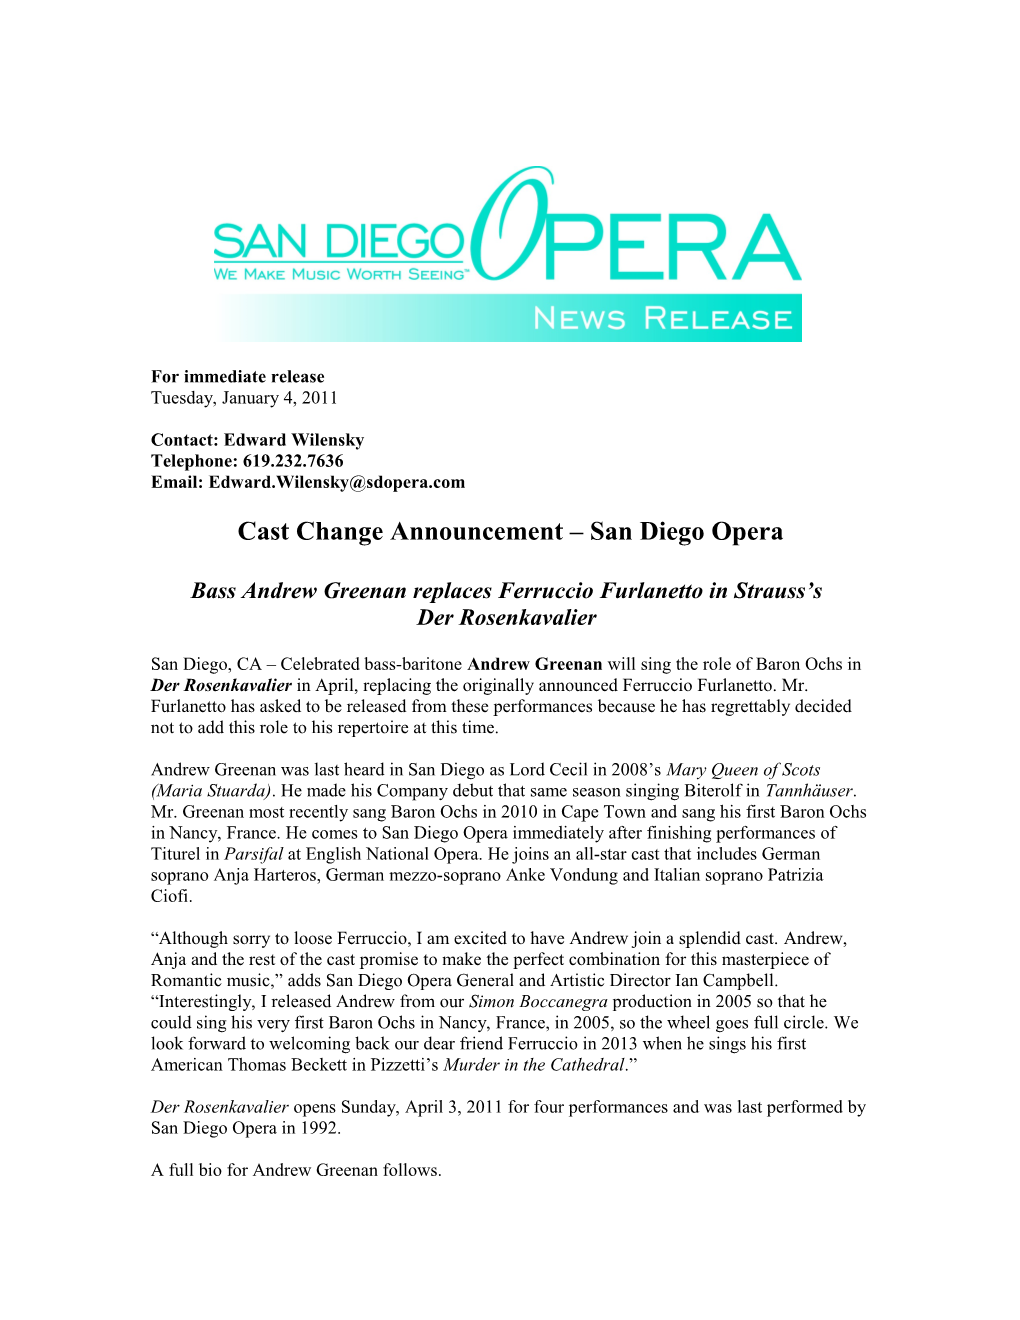 Cast Change Announcement San Diego Opera